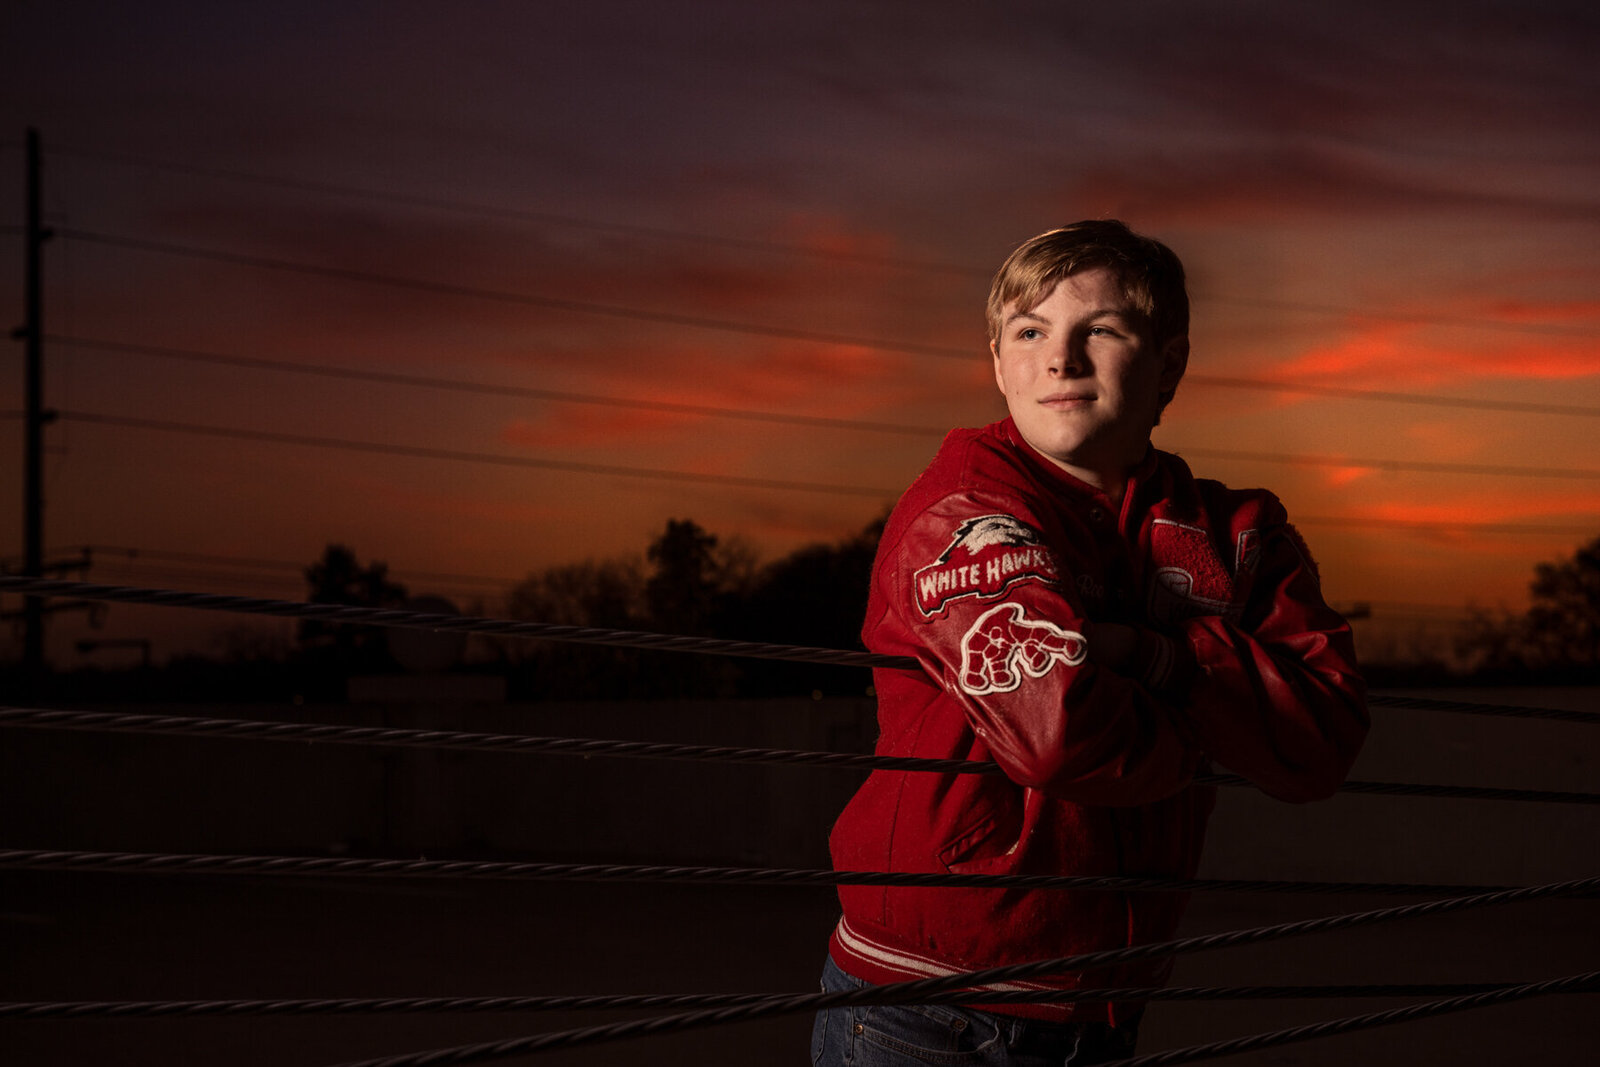 Mound Minnesota high school senior photo of boy in letter jacket at sunset